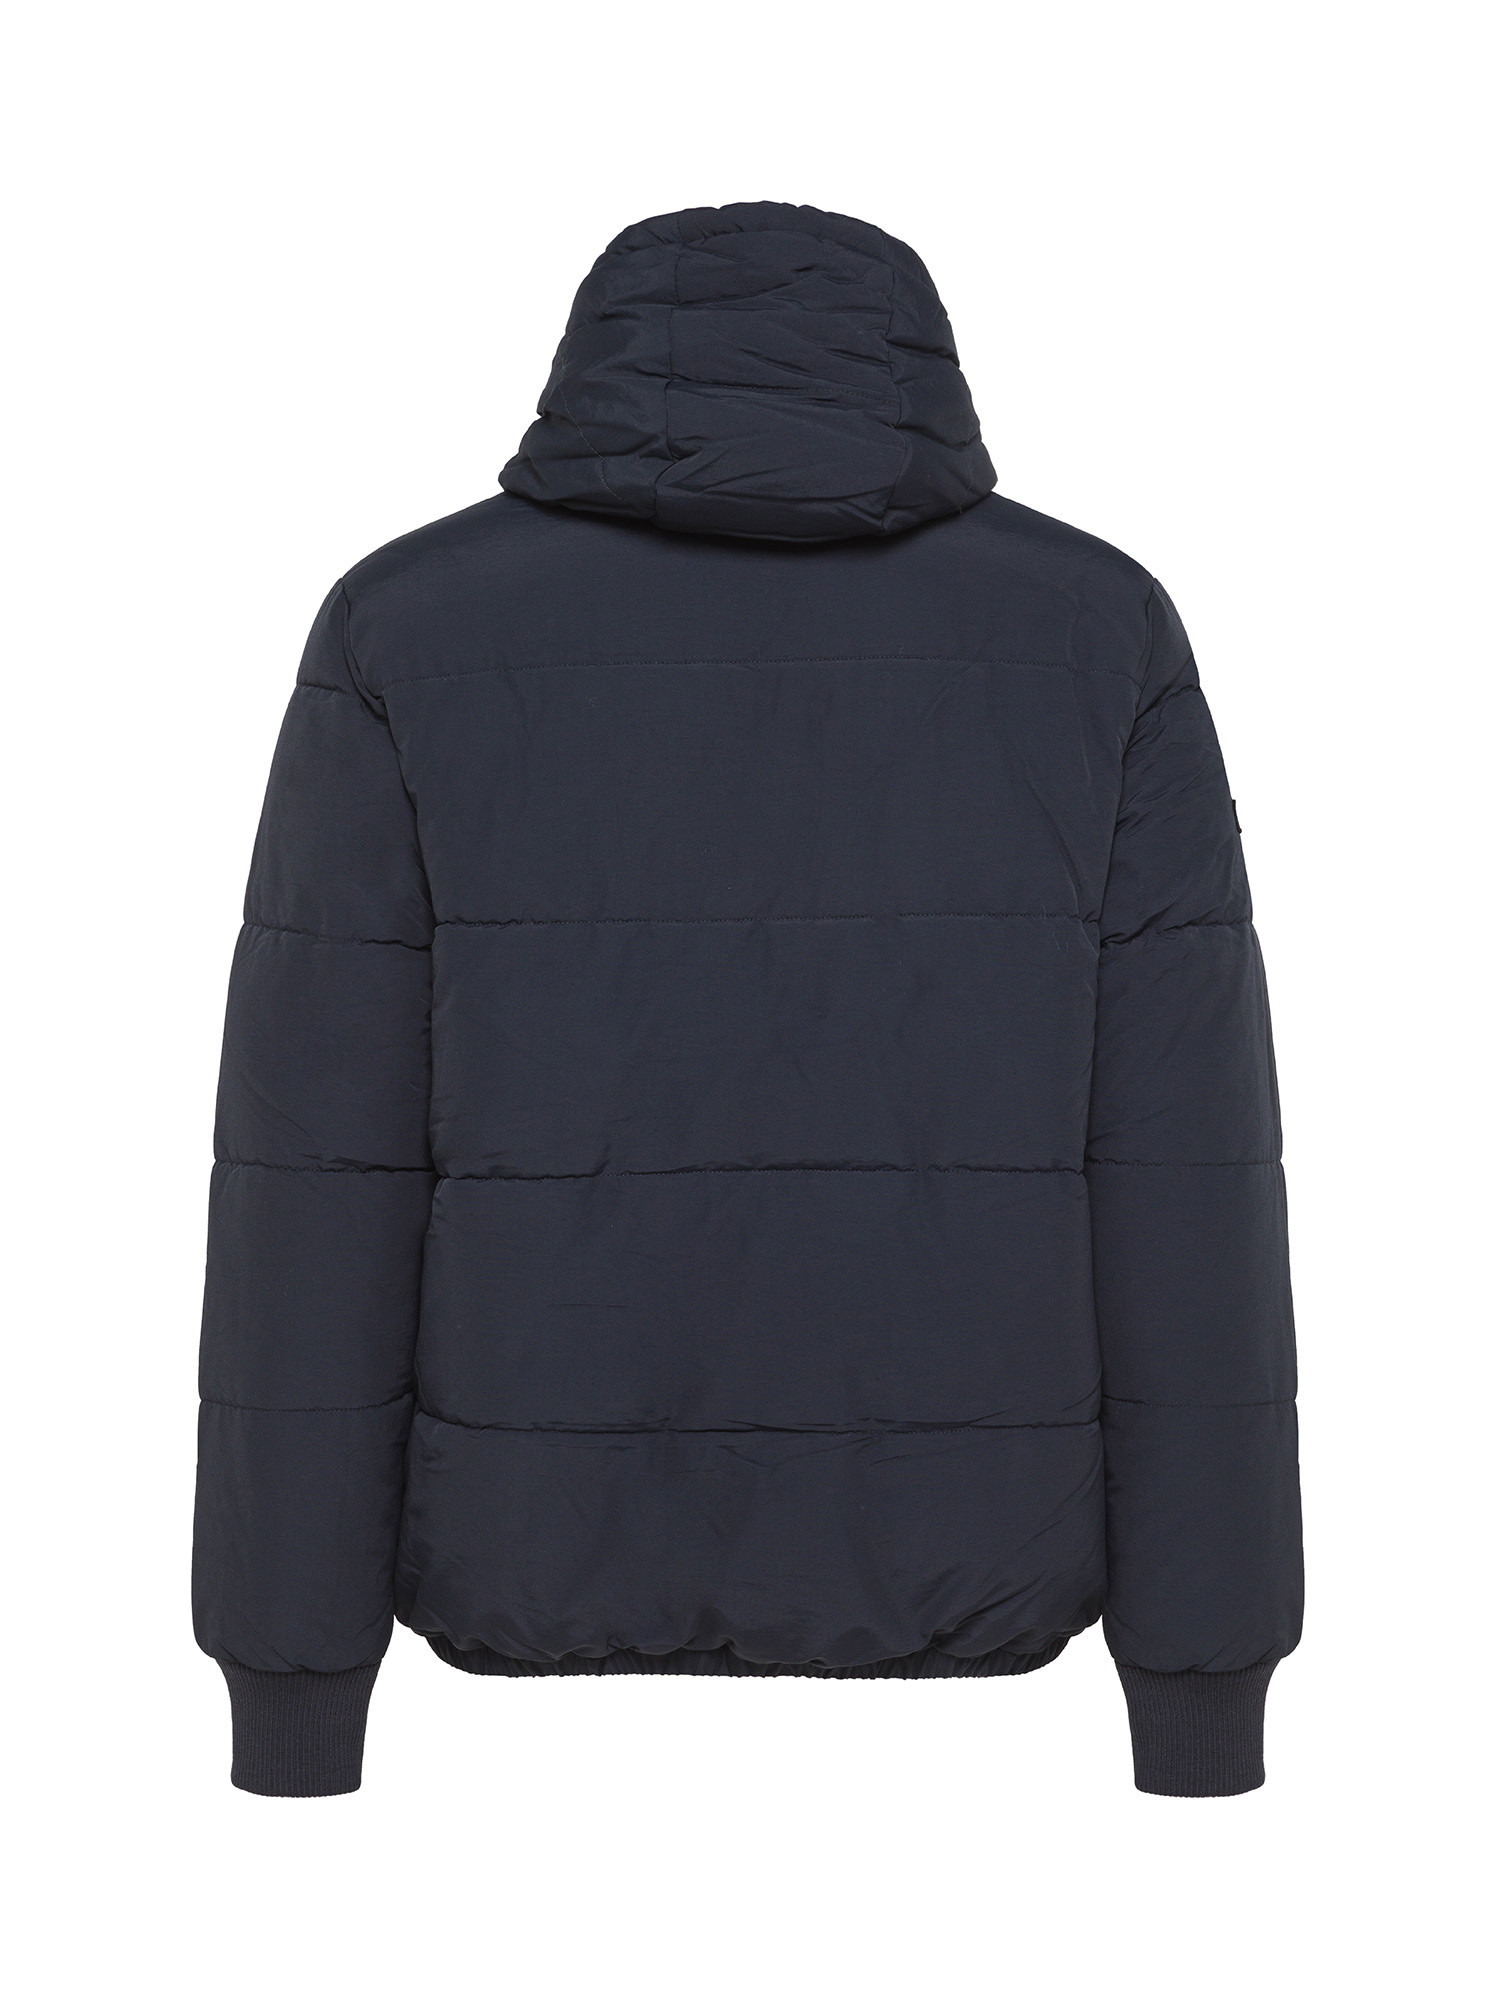 Superdry - Padded down jacket with hood, Dark Blue, large image number 1